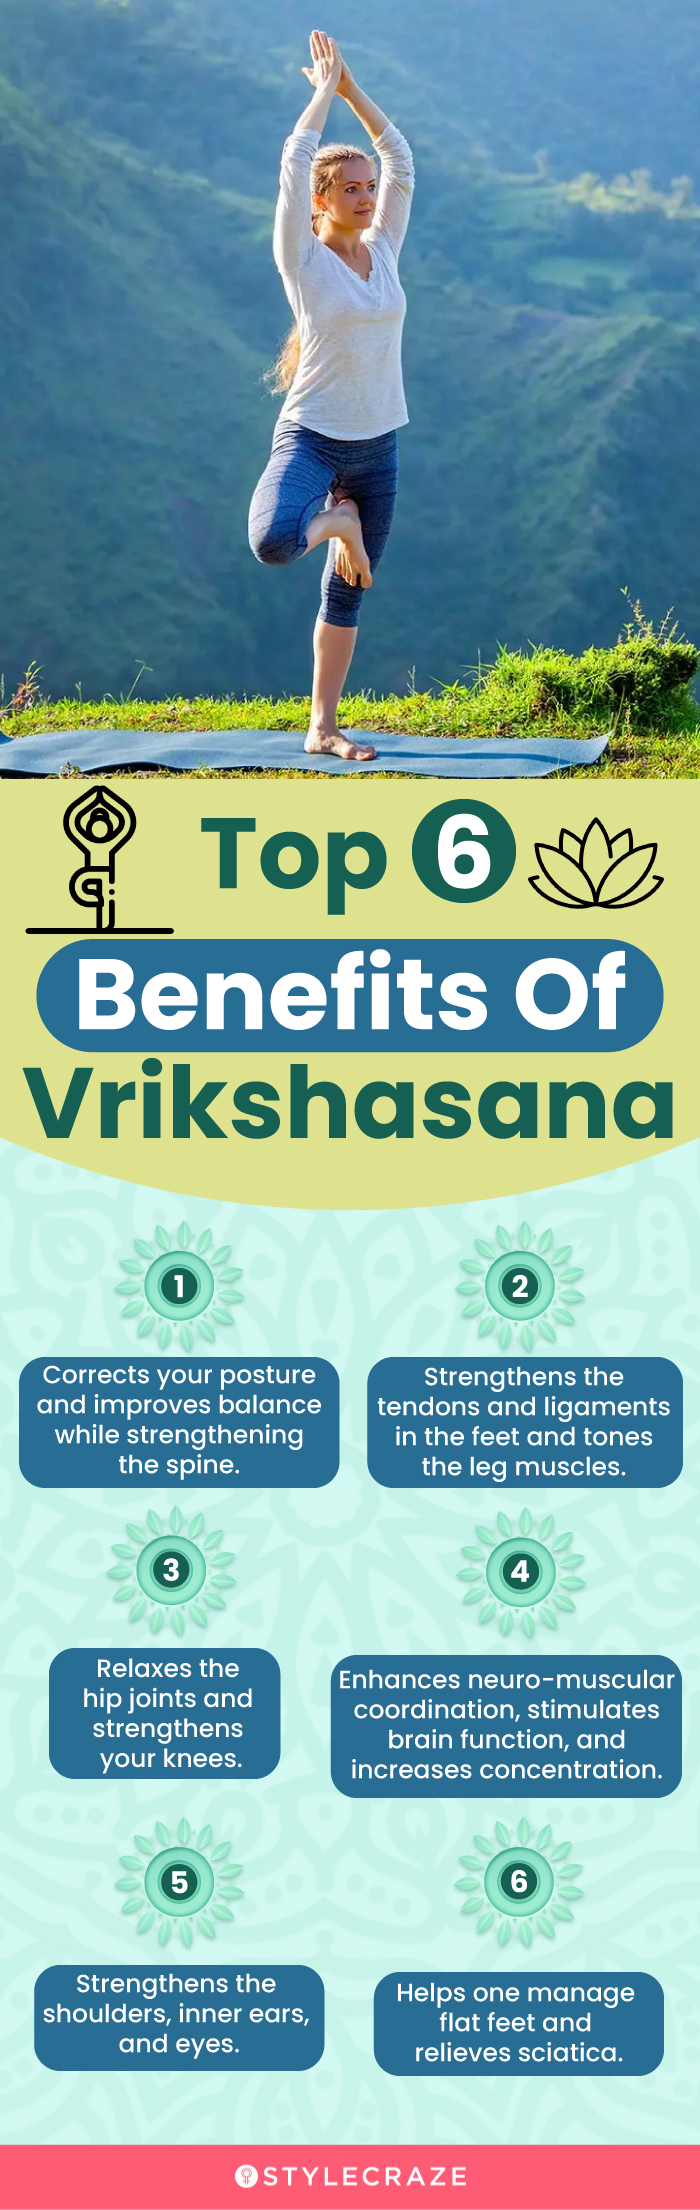 These are the benefits of Vrikshasana | Tree pose, Body balance, Improve  concentration